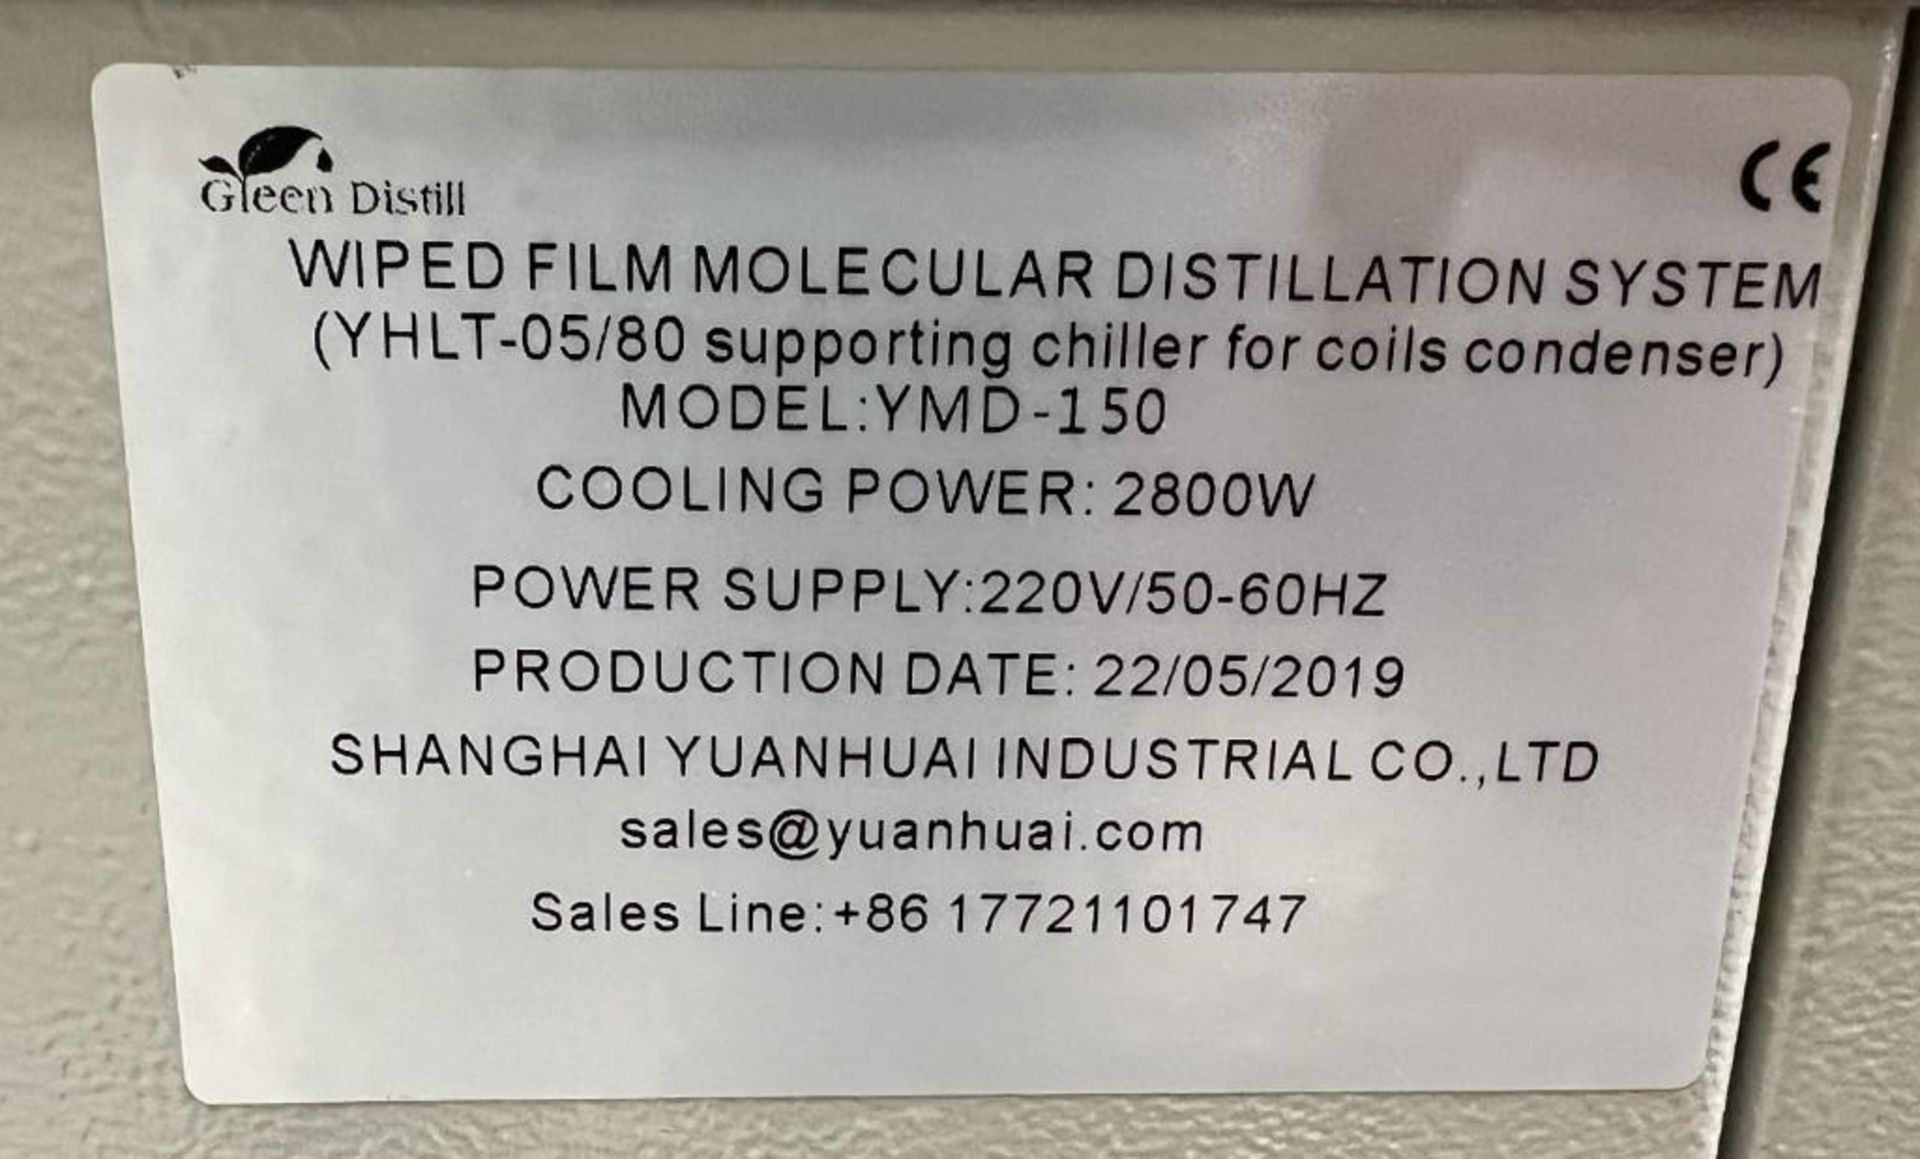 YHCHEM Wiped Film Molecular Distillation System, Model YMD-150, Built 05/2019. With misc. glass, vac - Image 20 of 29